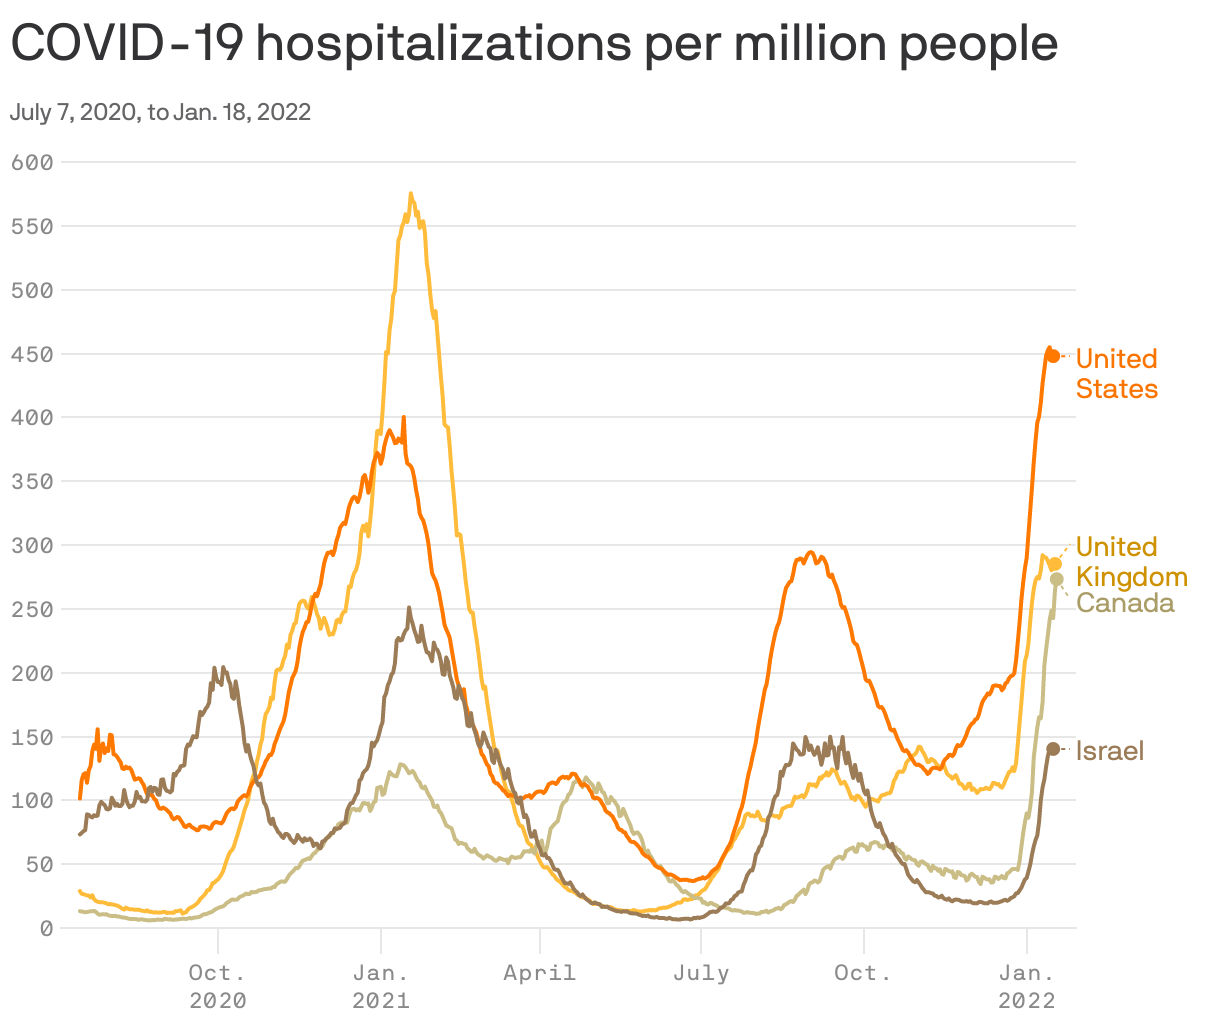 COVID-19 hospitalizations per million people